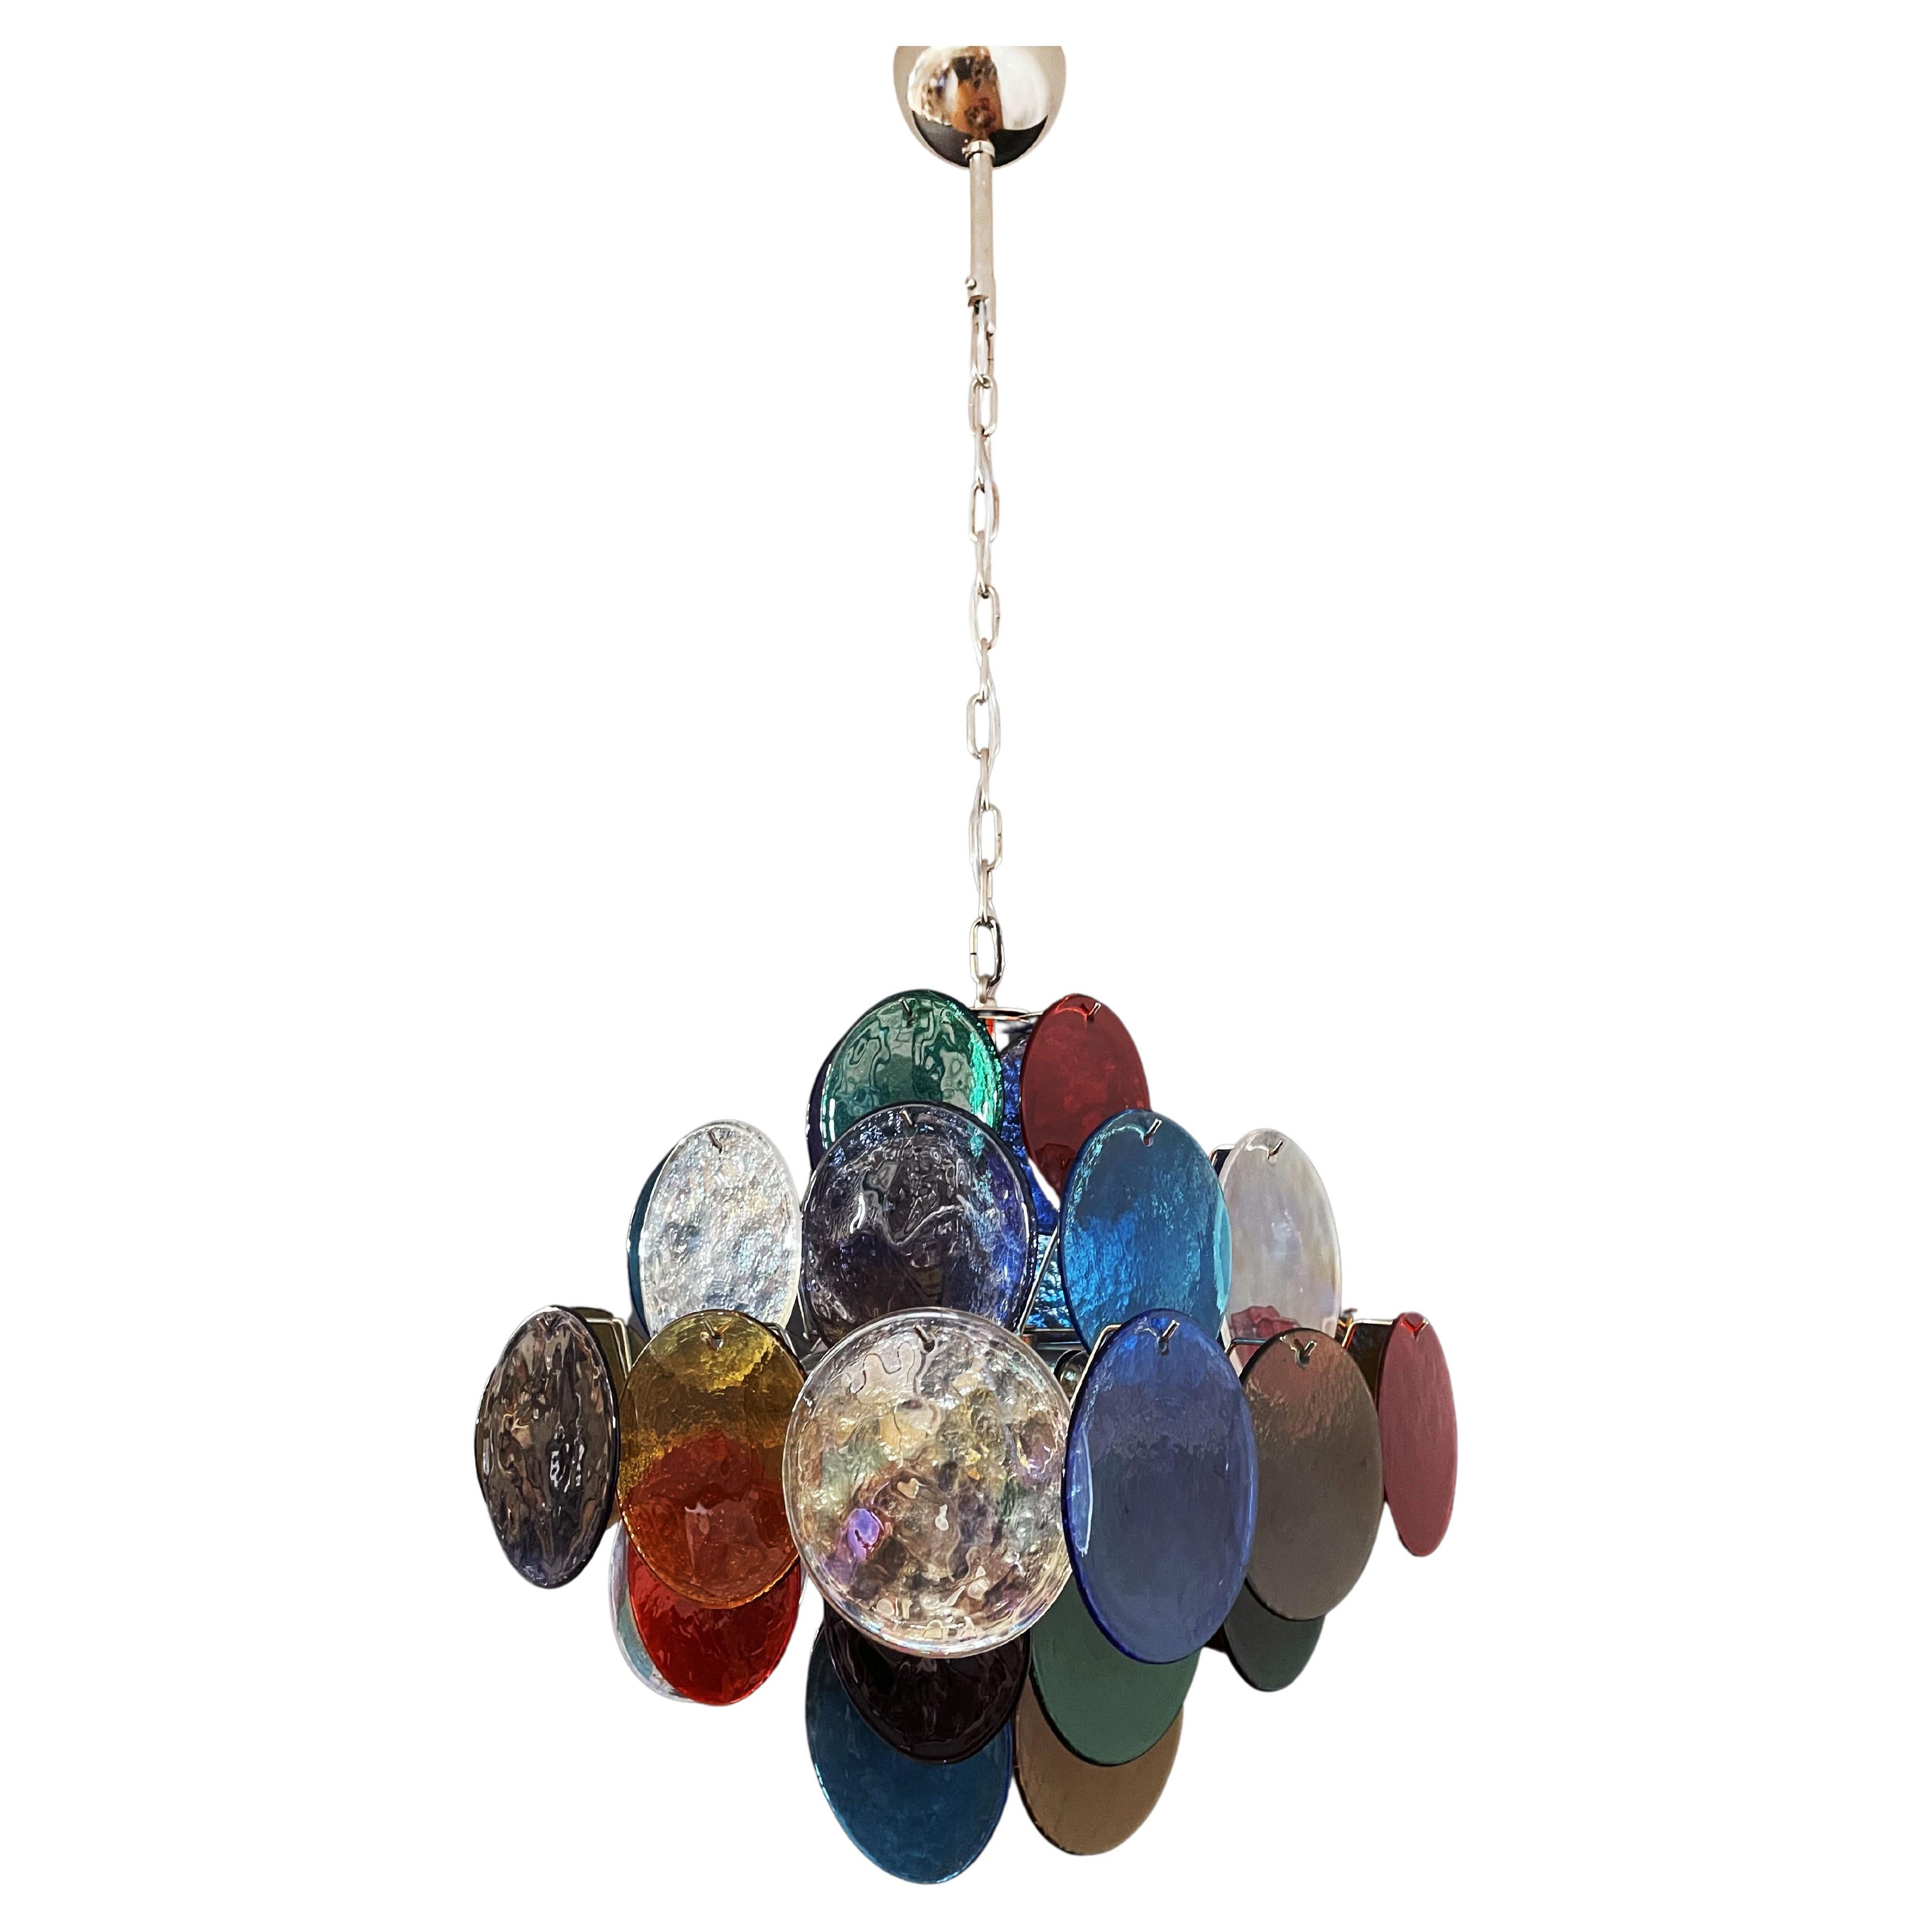 Vintage Italian Murano chandelier - 36 multicolored disks 6